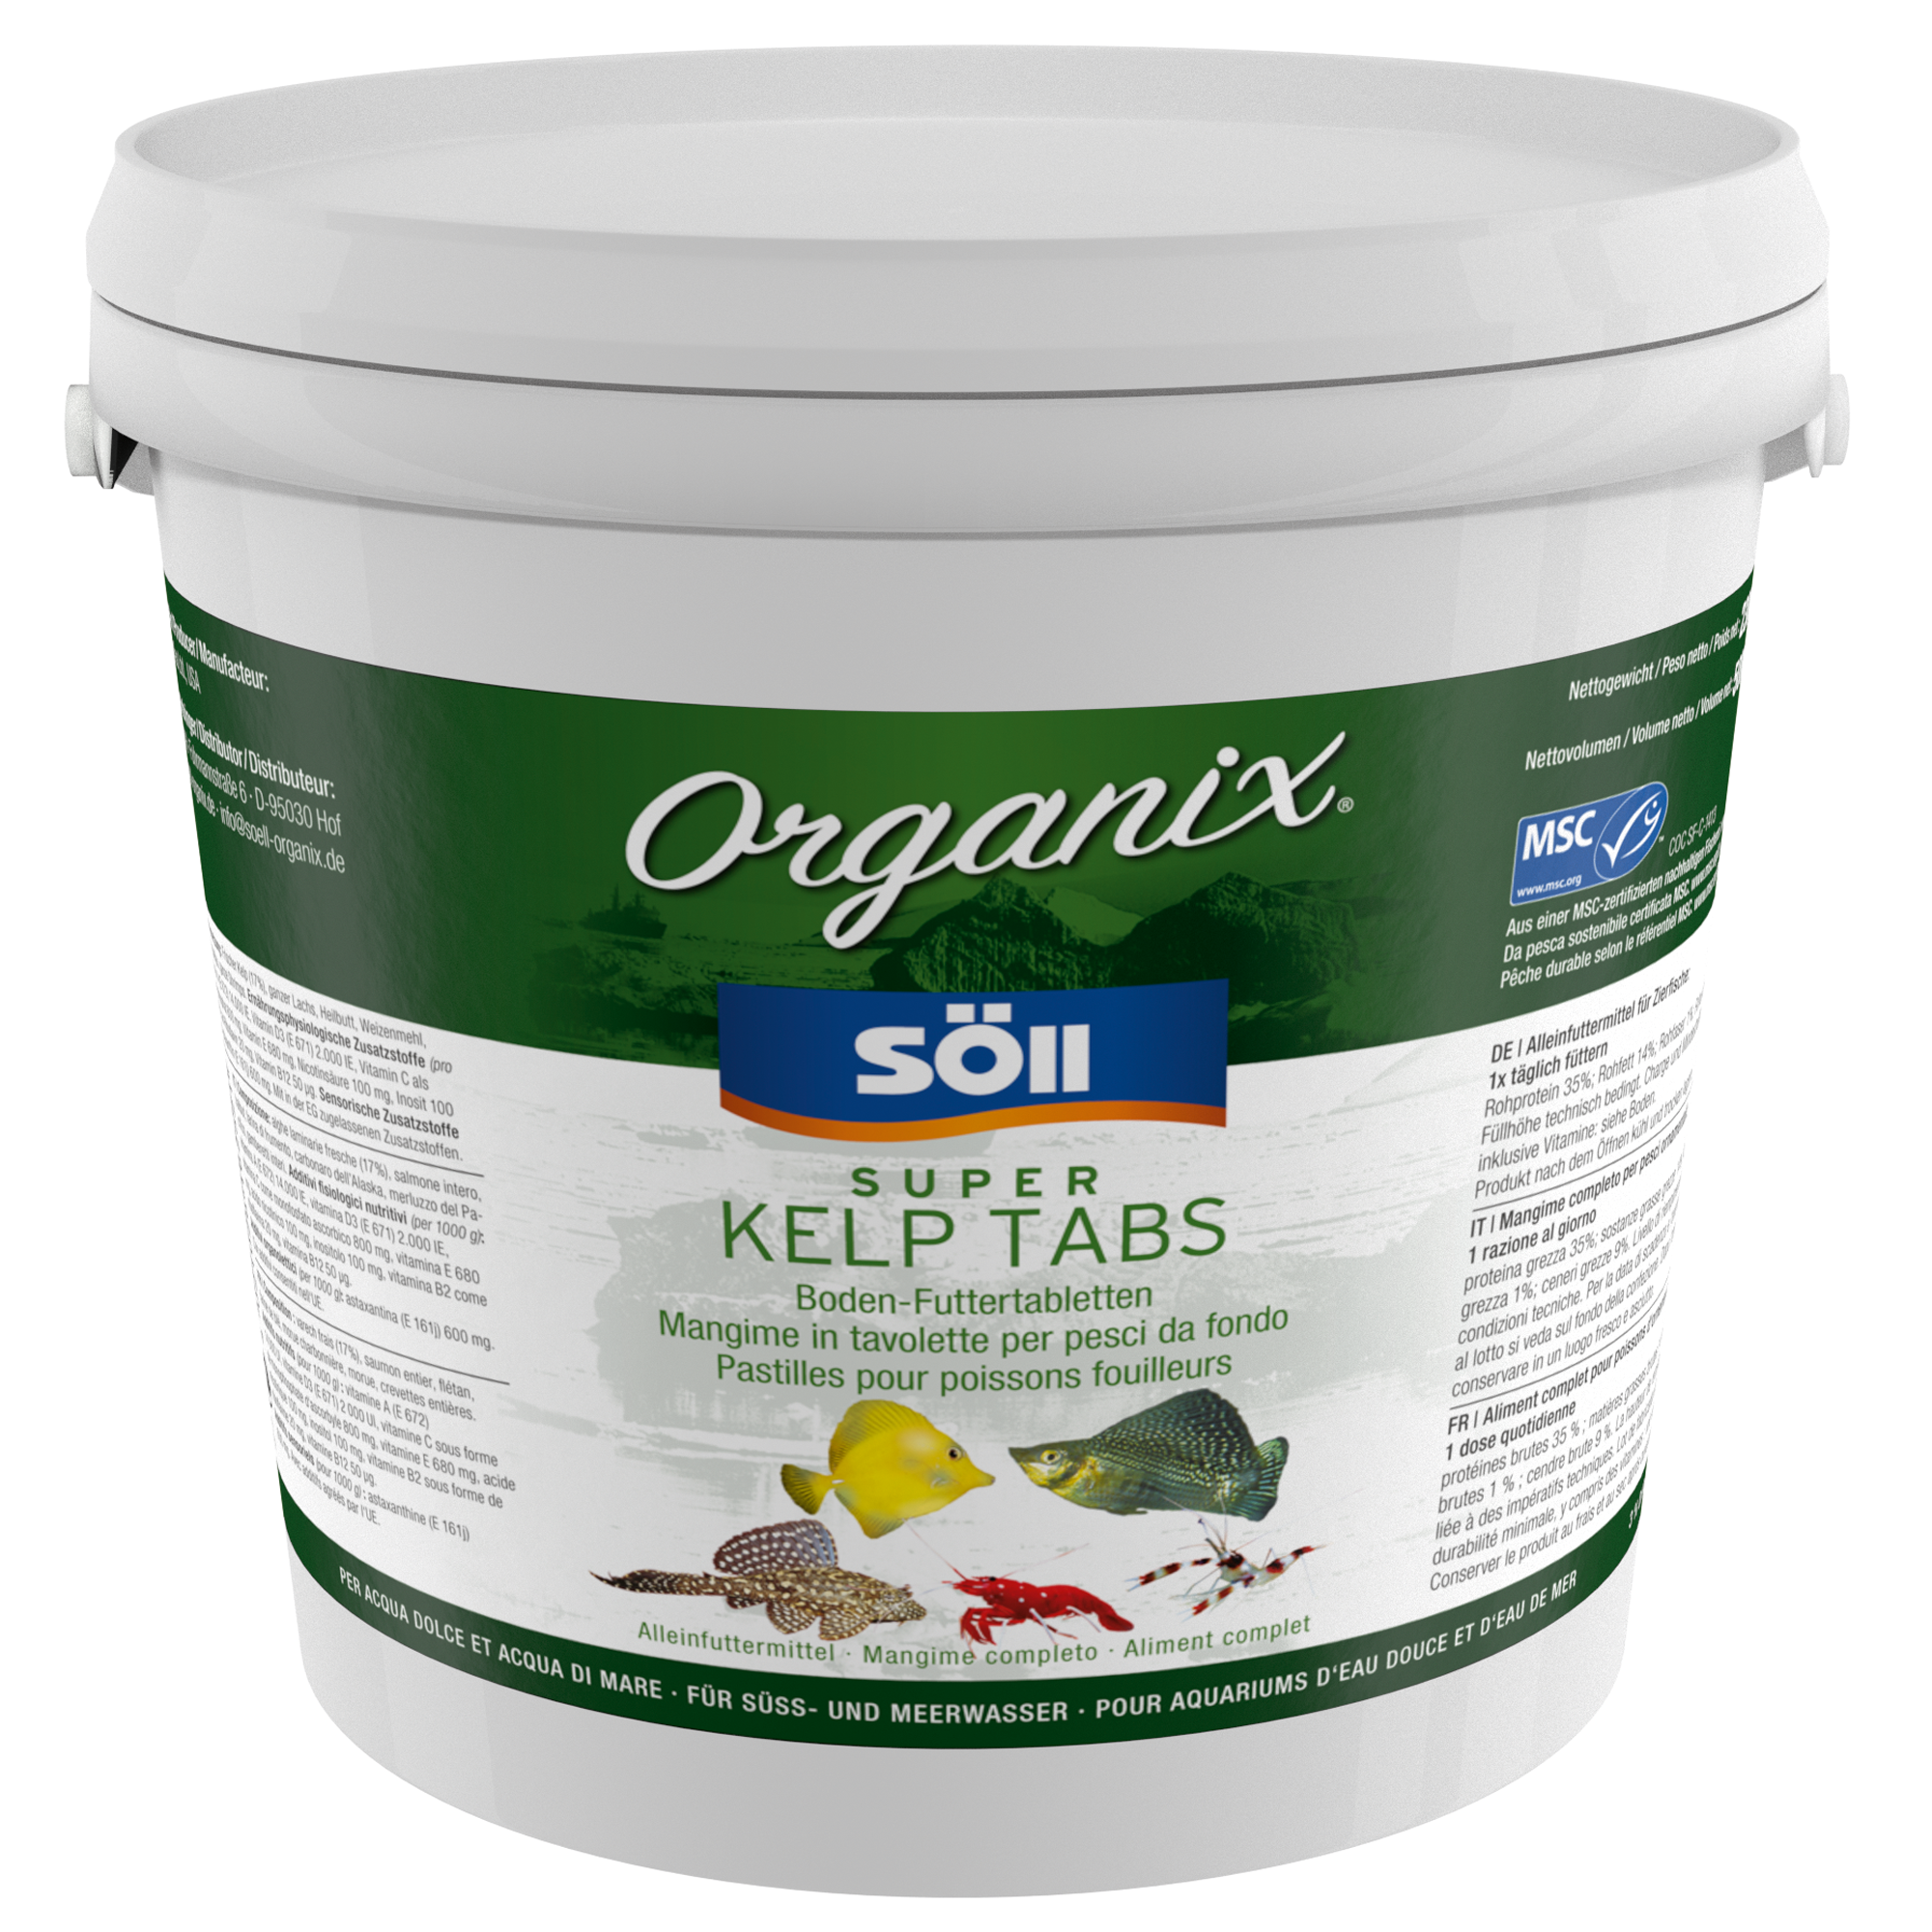 Organix Super Kelp Tabs 5 l + product picture